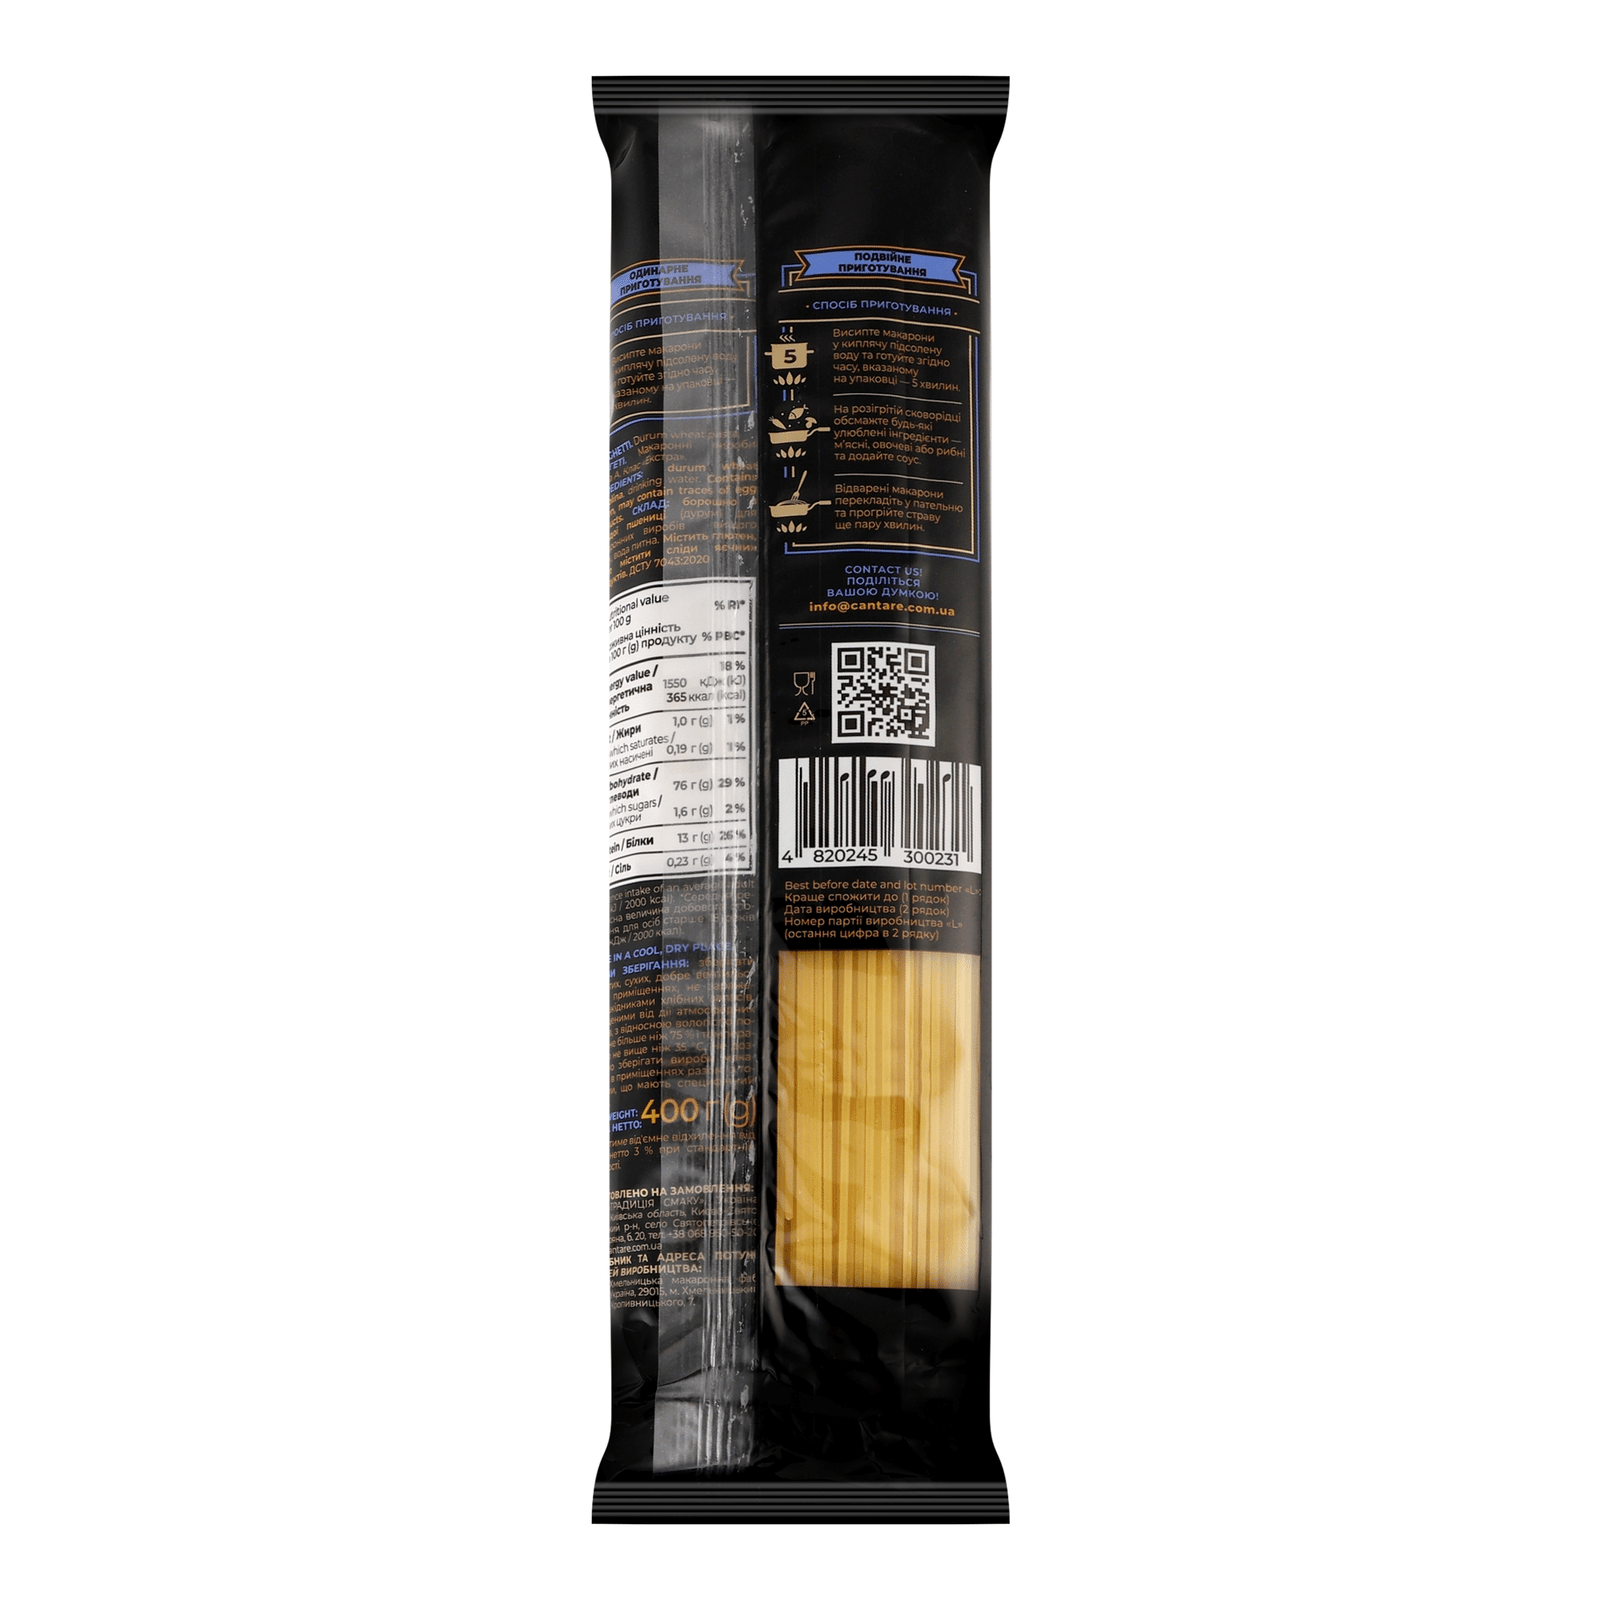 Вироби макаронні Cantare Spaghetti №18 - 2